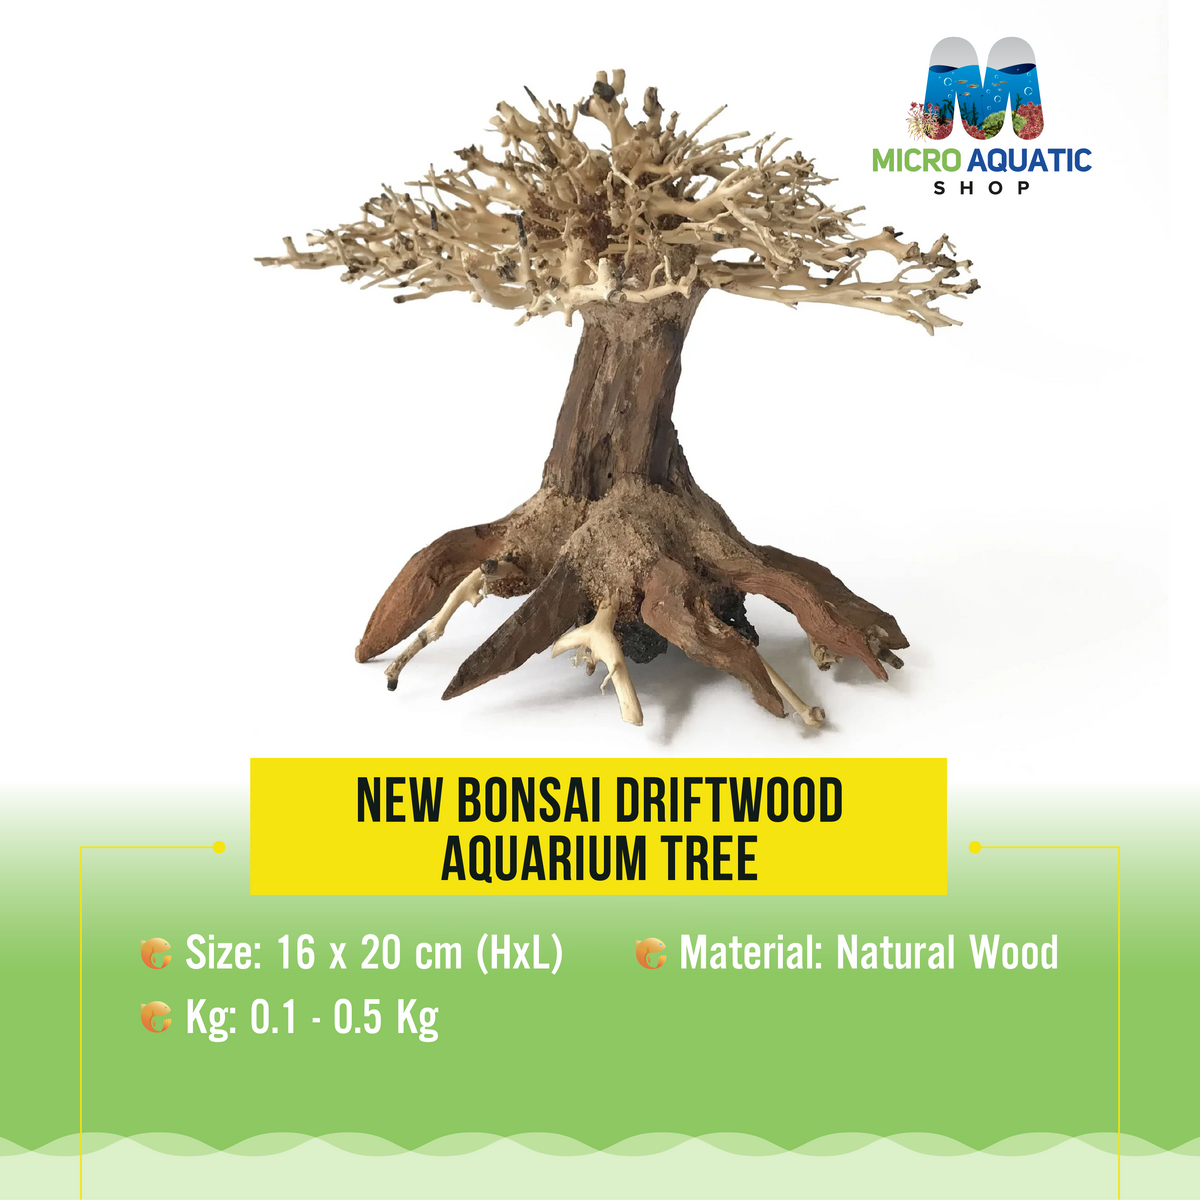 New Bonsai Driftwood Aquarium Tree